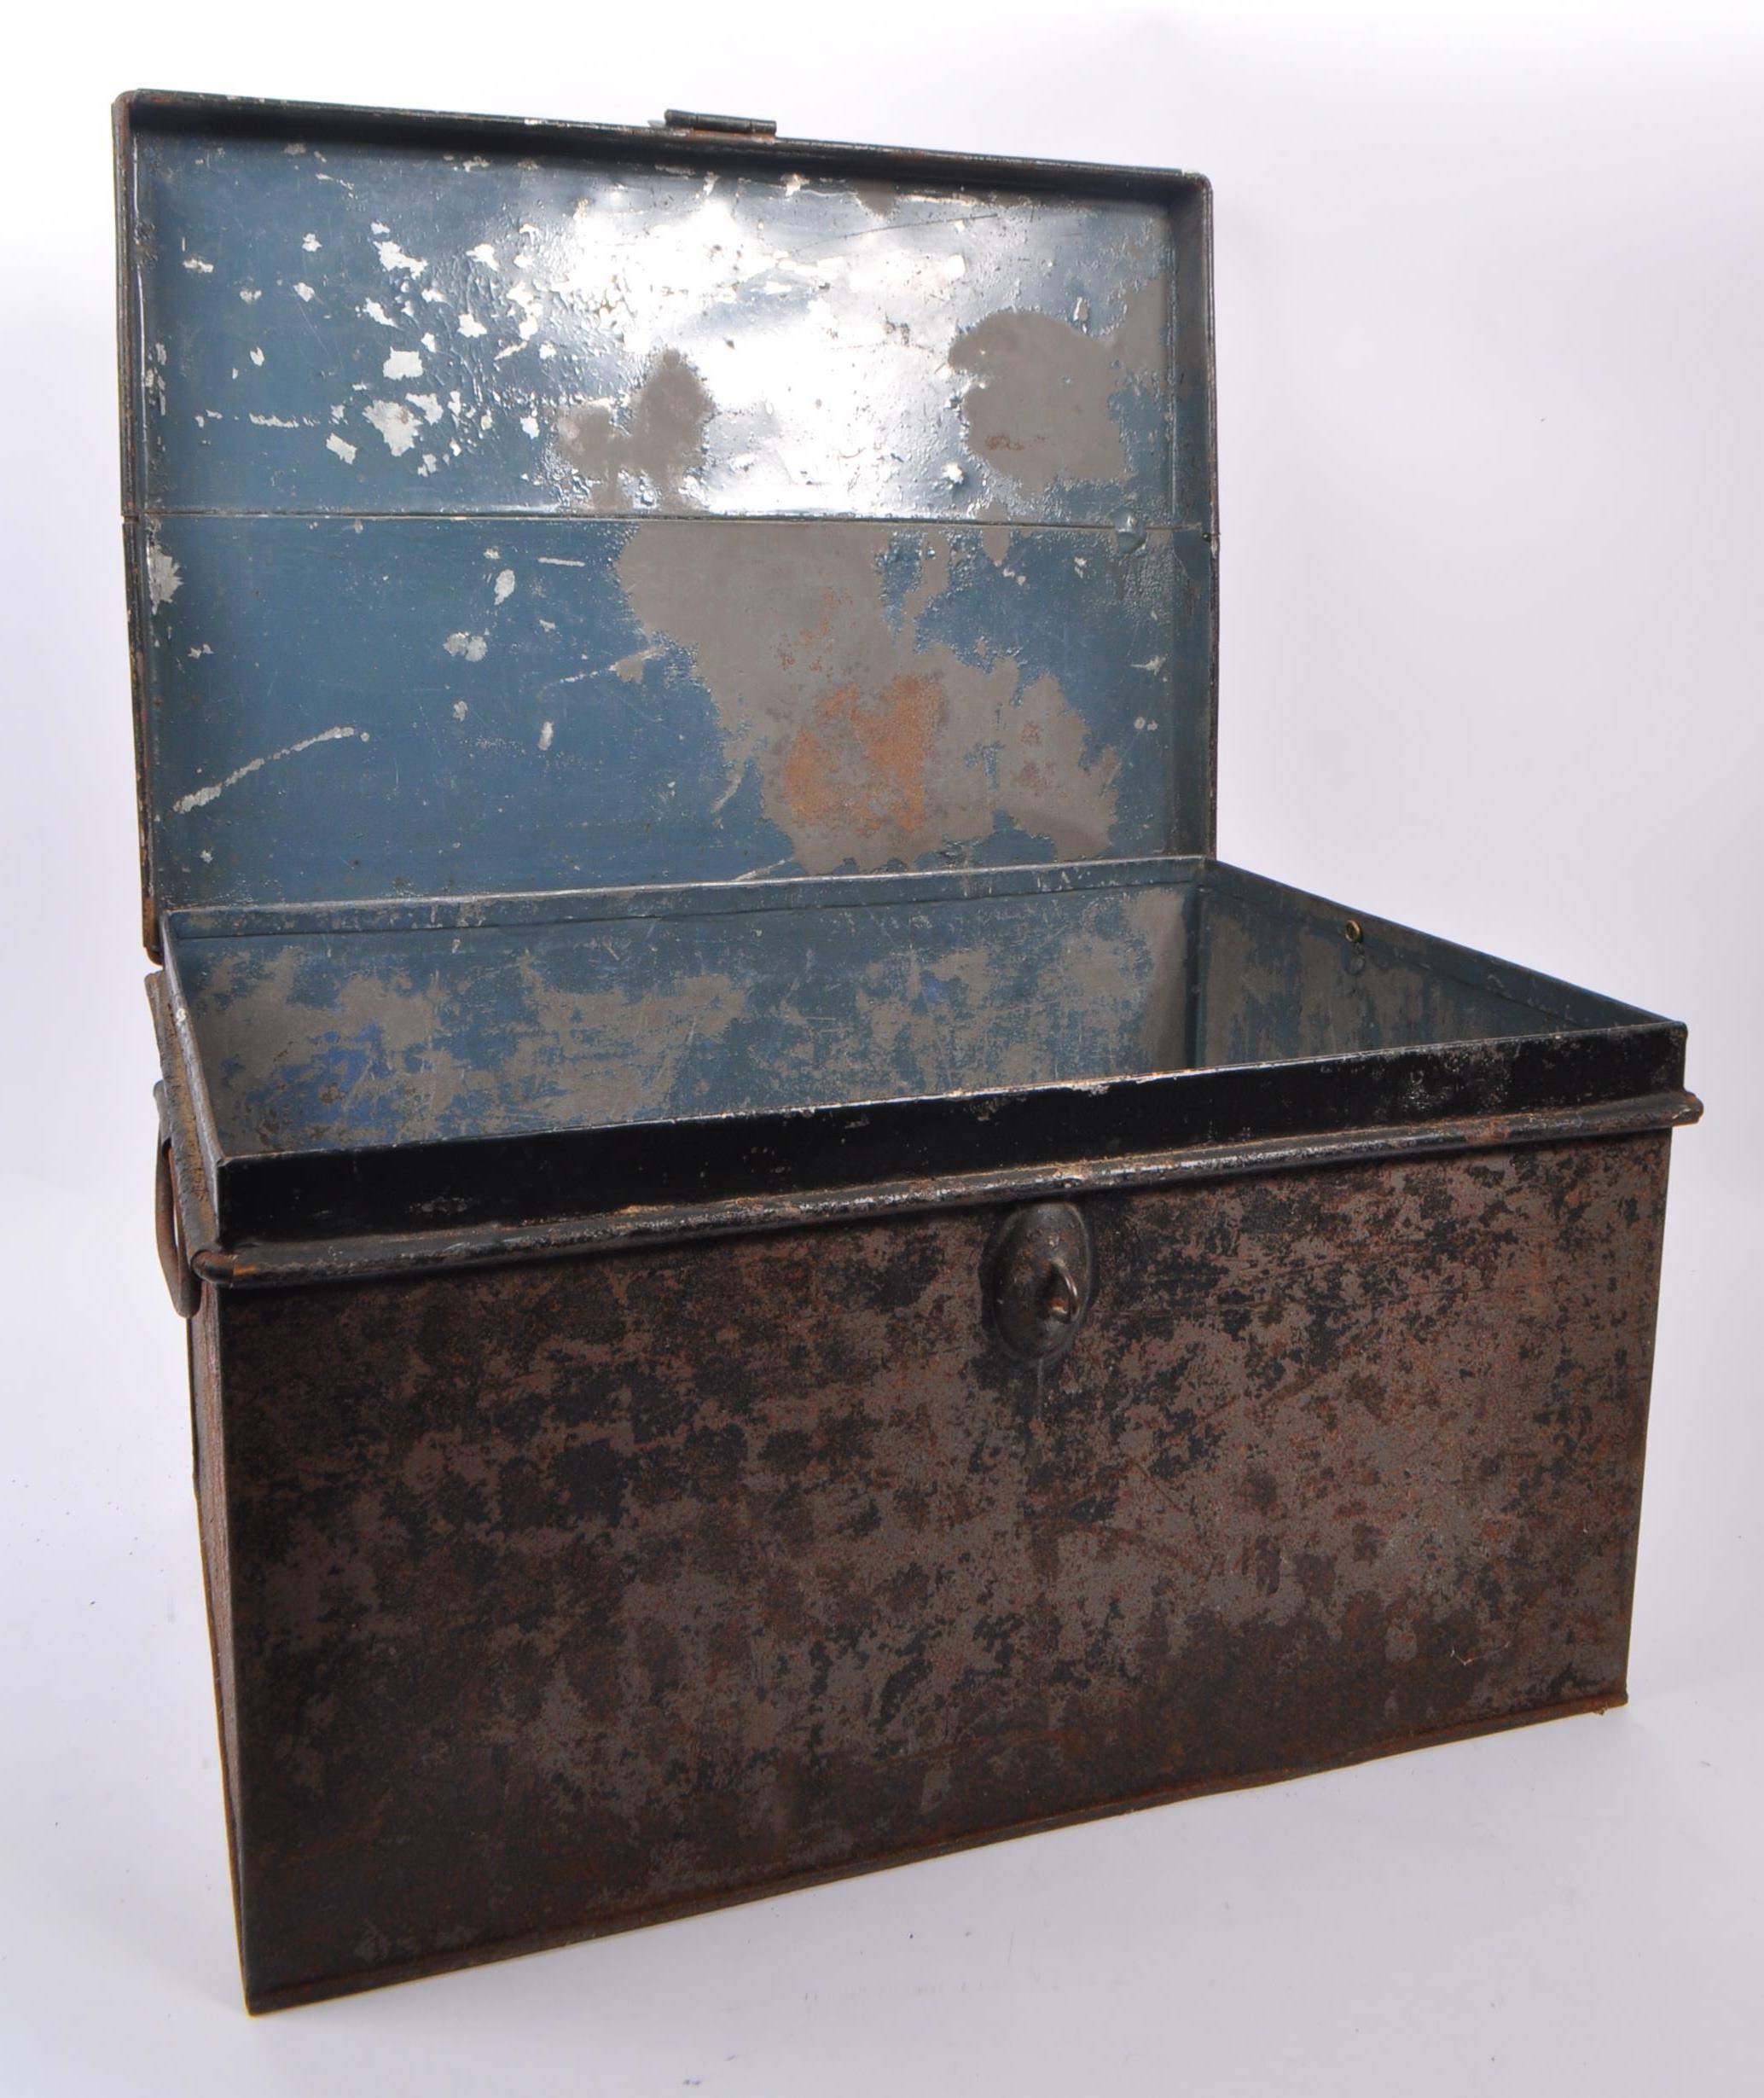 VINTAGE 20TH CENTURY LIDDED METAL DEED BOX - Image 2 of 4